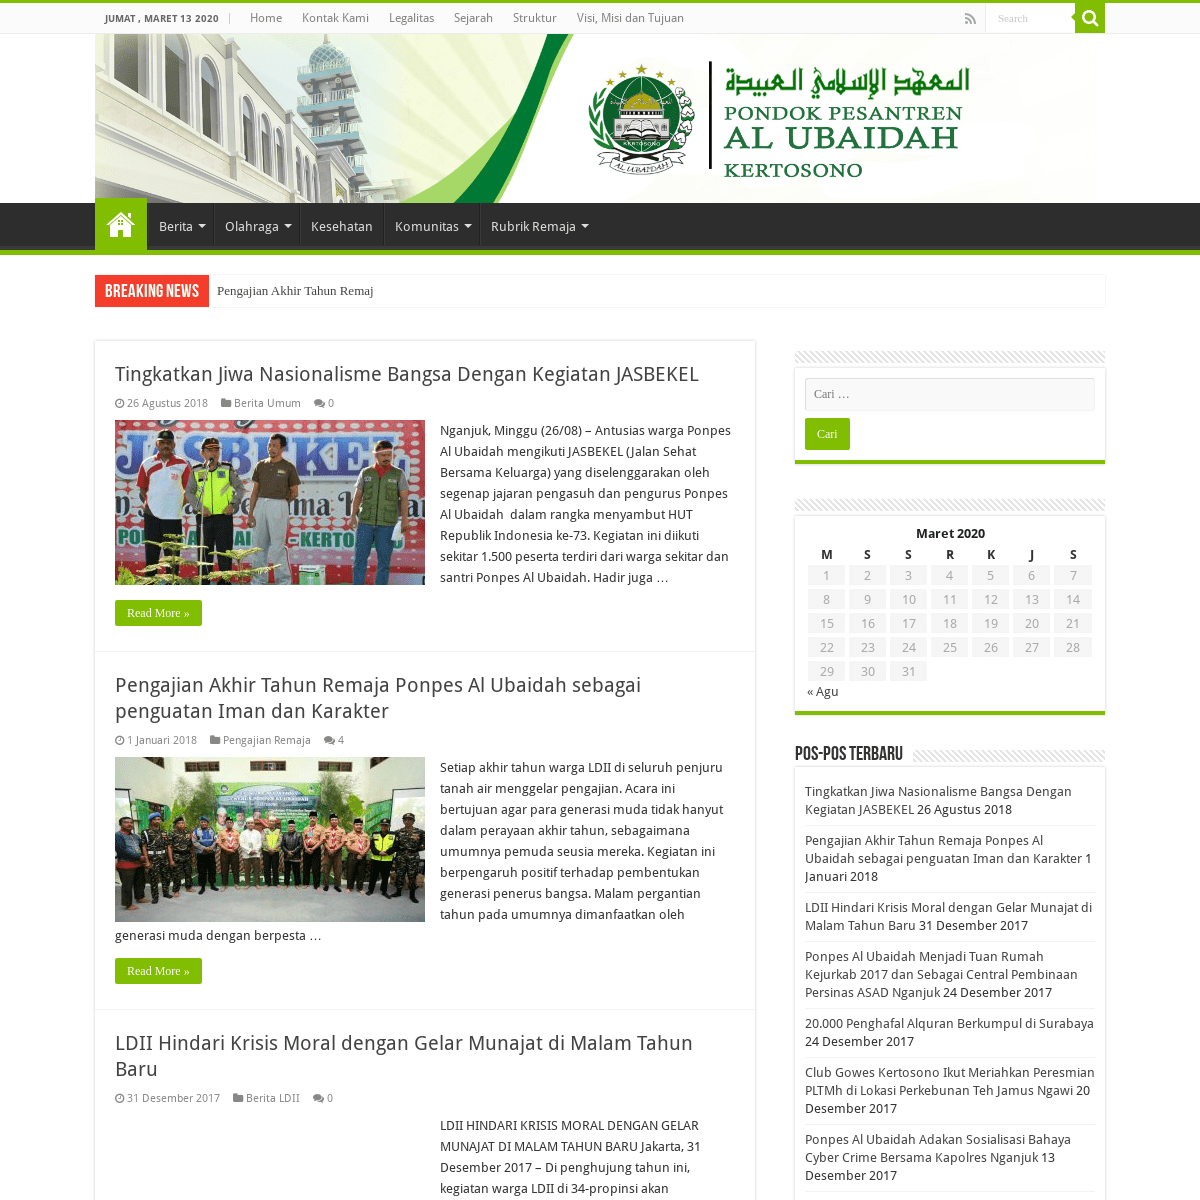 A complete backup of alubaidah.org